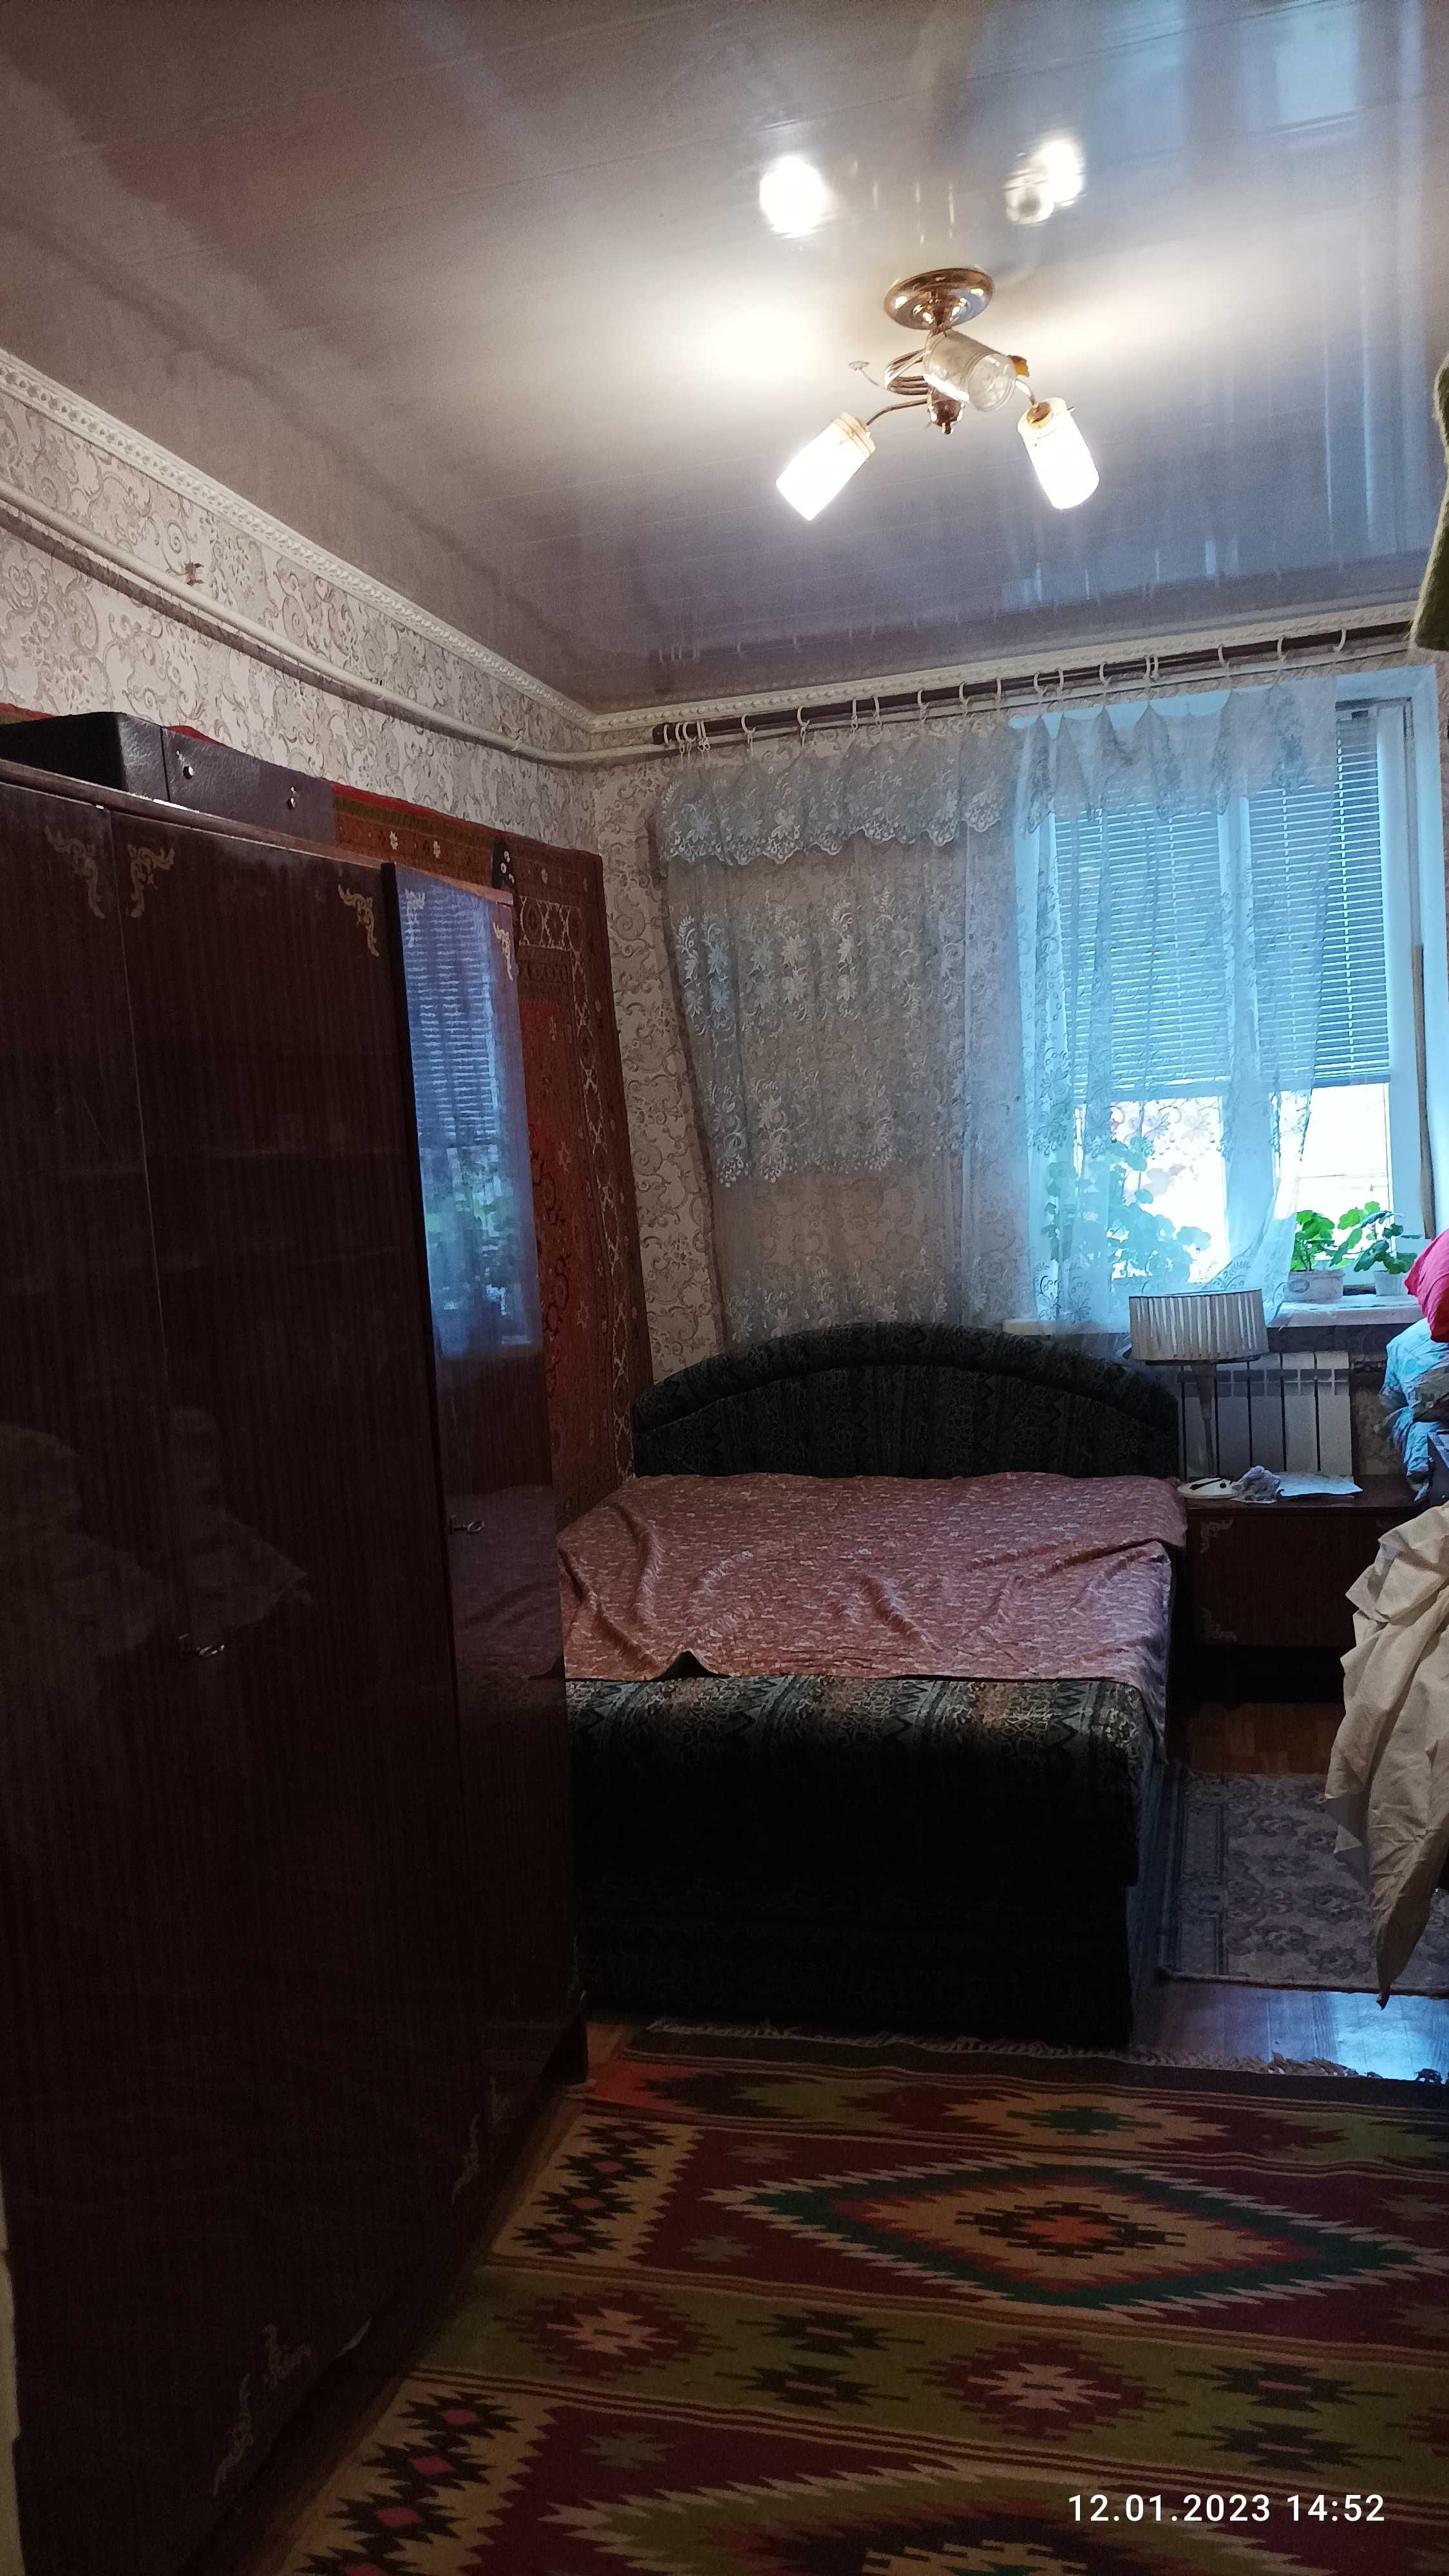 Квартира 2-х комнатная на Первомайке.